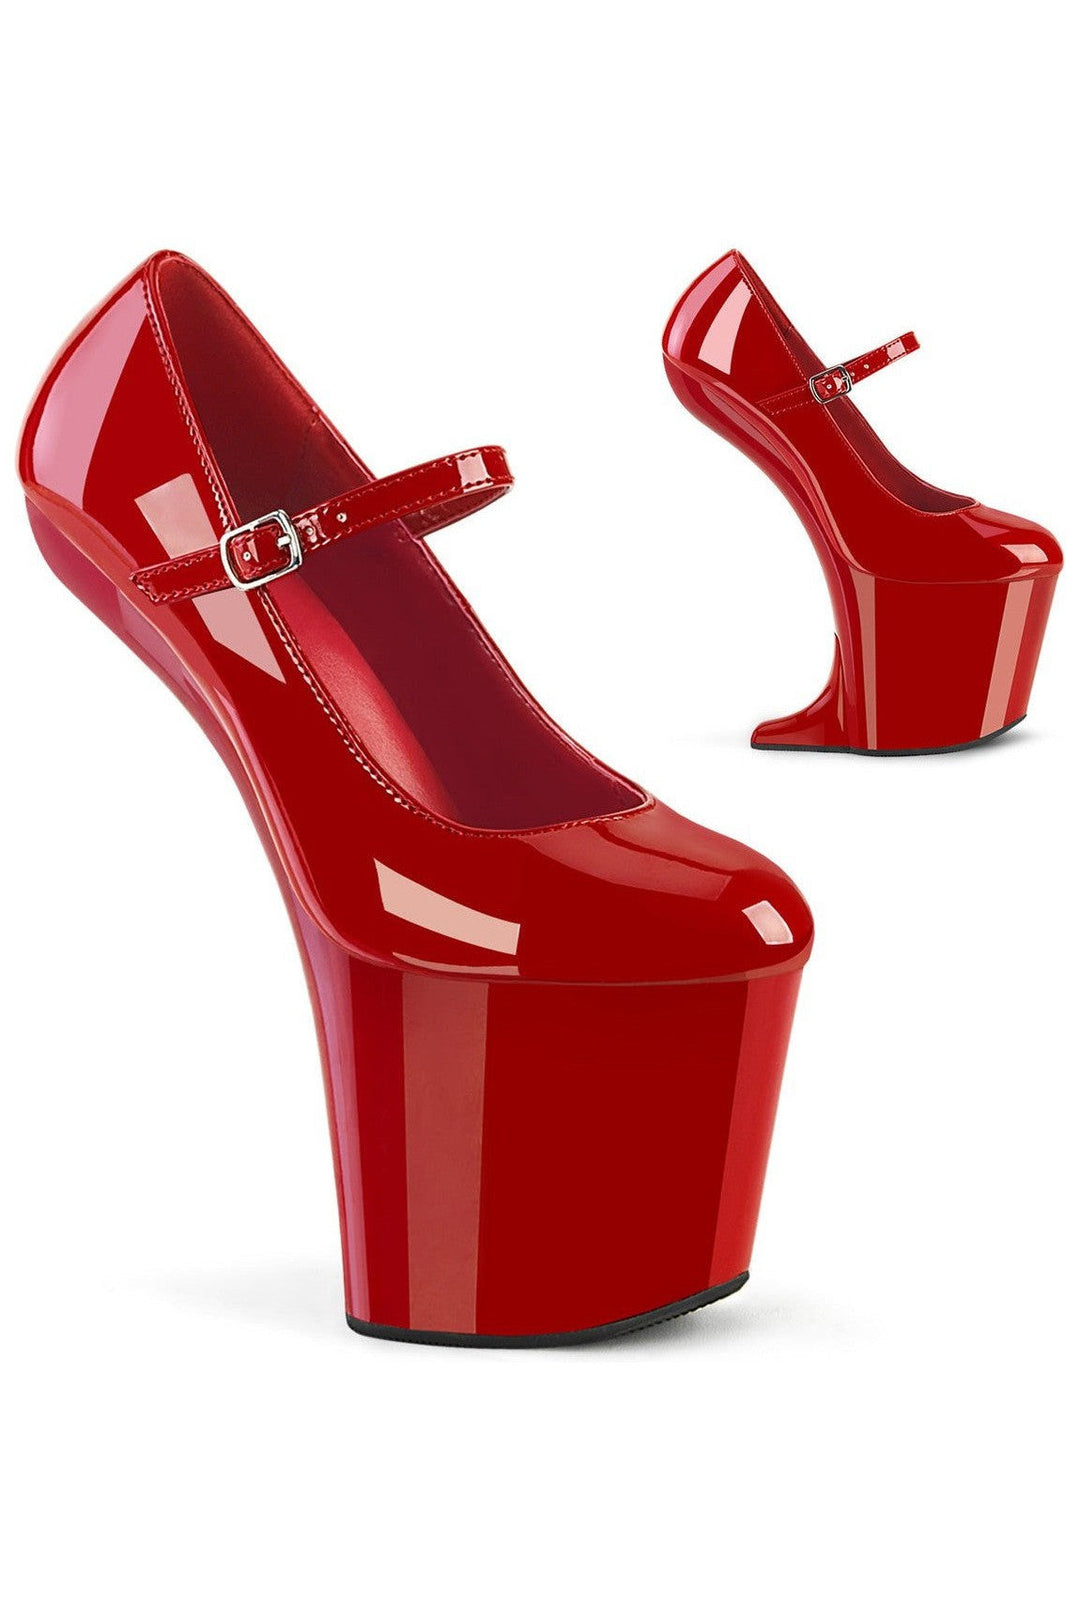 Pleaser Red Pumps Platform Stripper Shoes | Buy at Sexyshoes.com